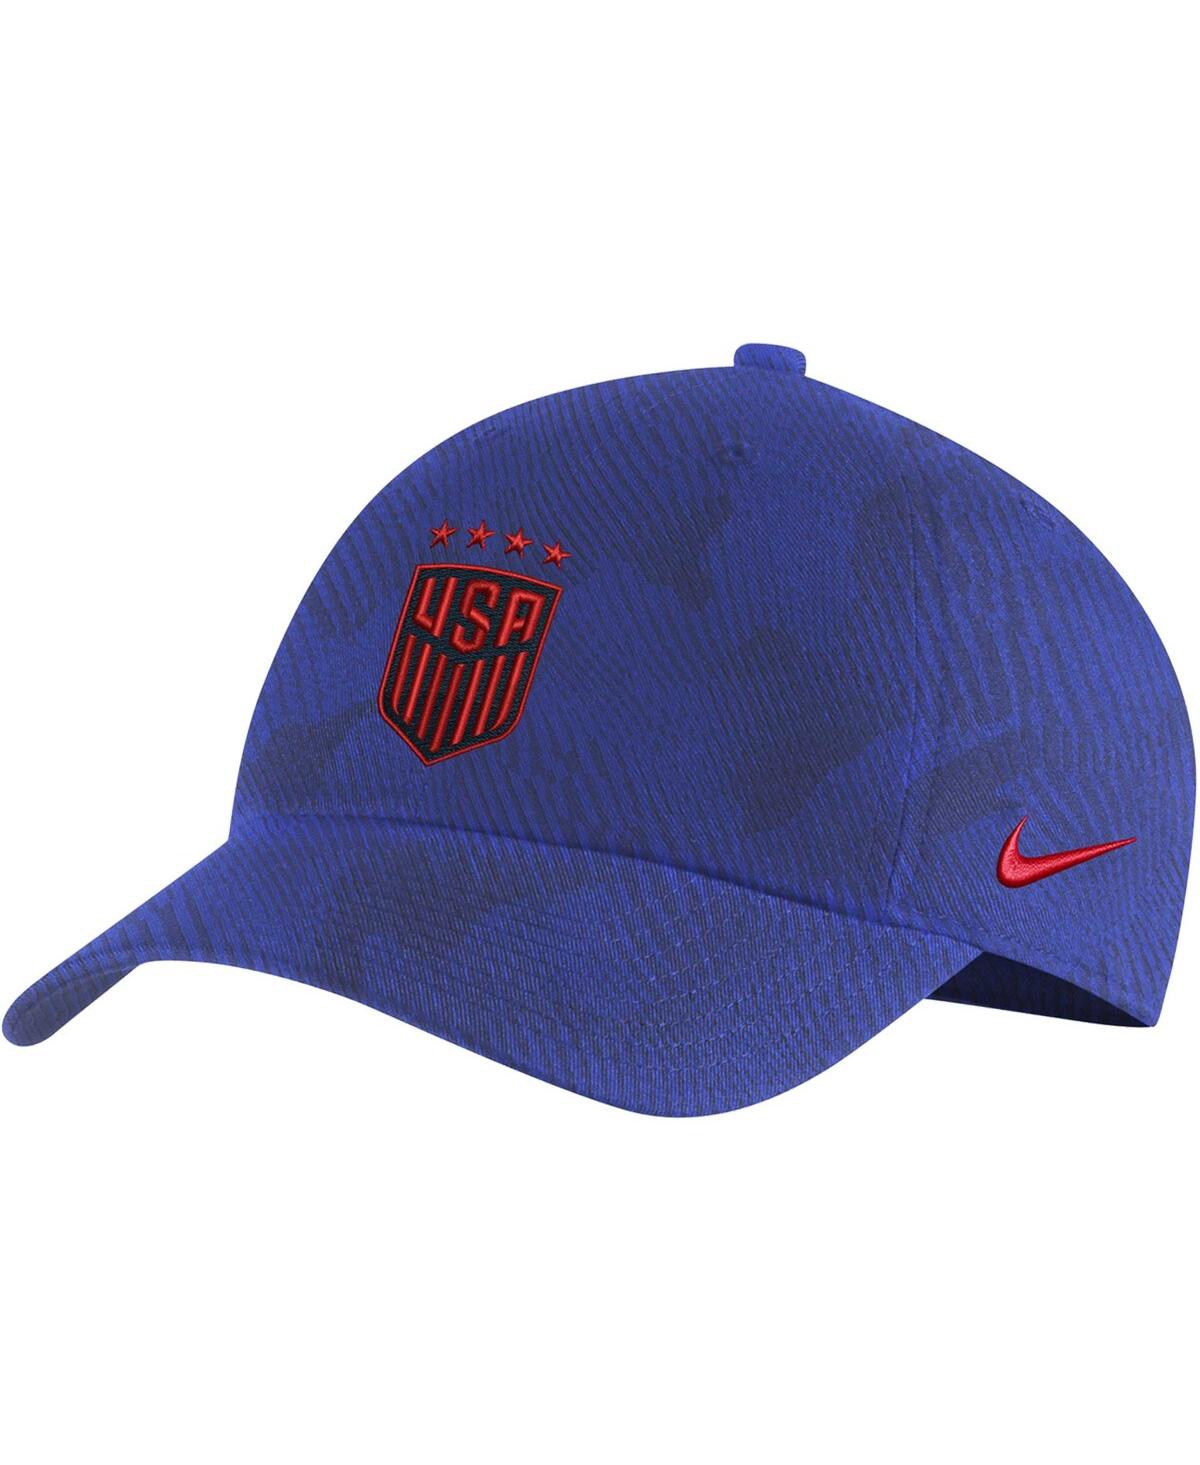 Shop Nike Men's  Royal Uswnt Campus Performance Adjustable Hat